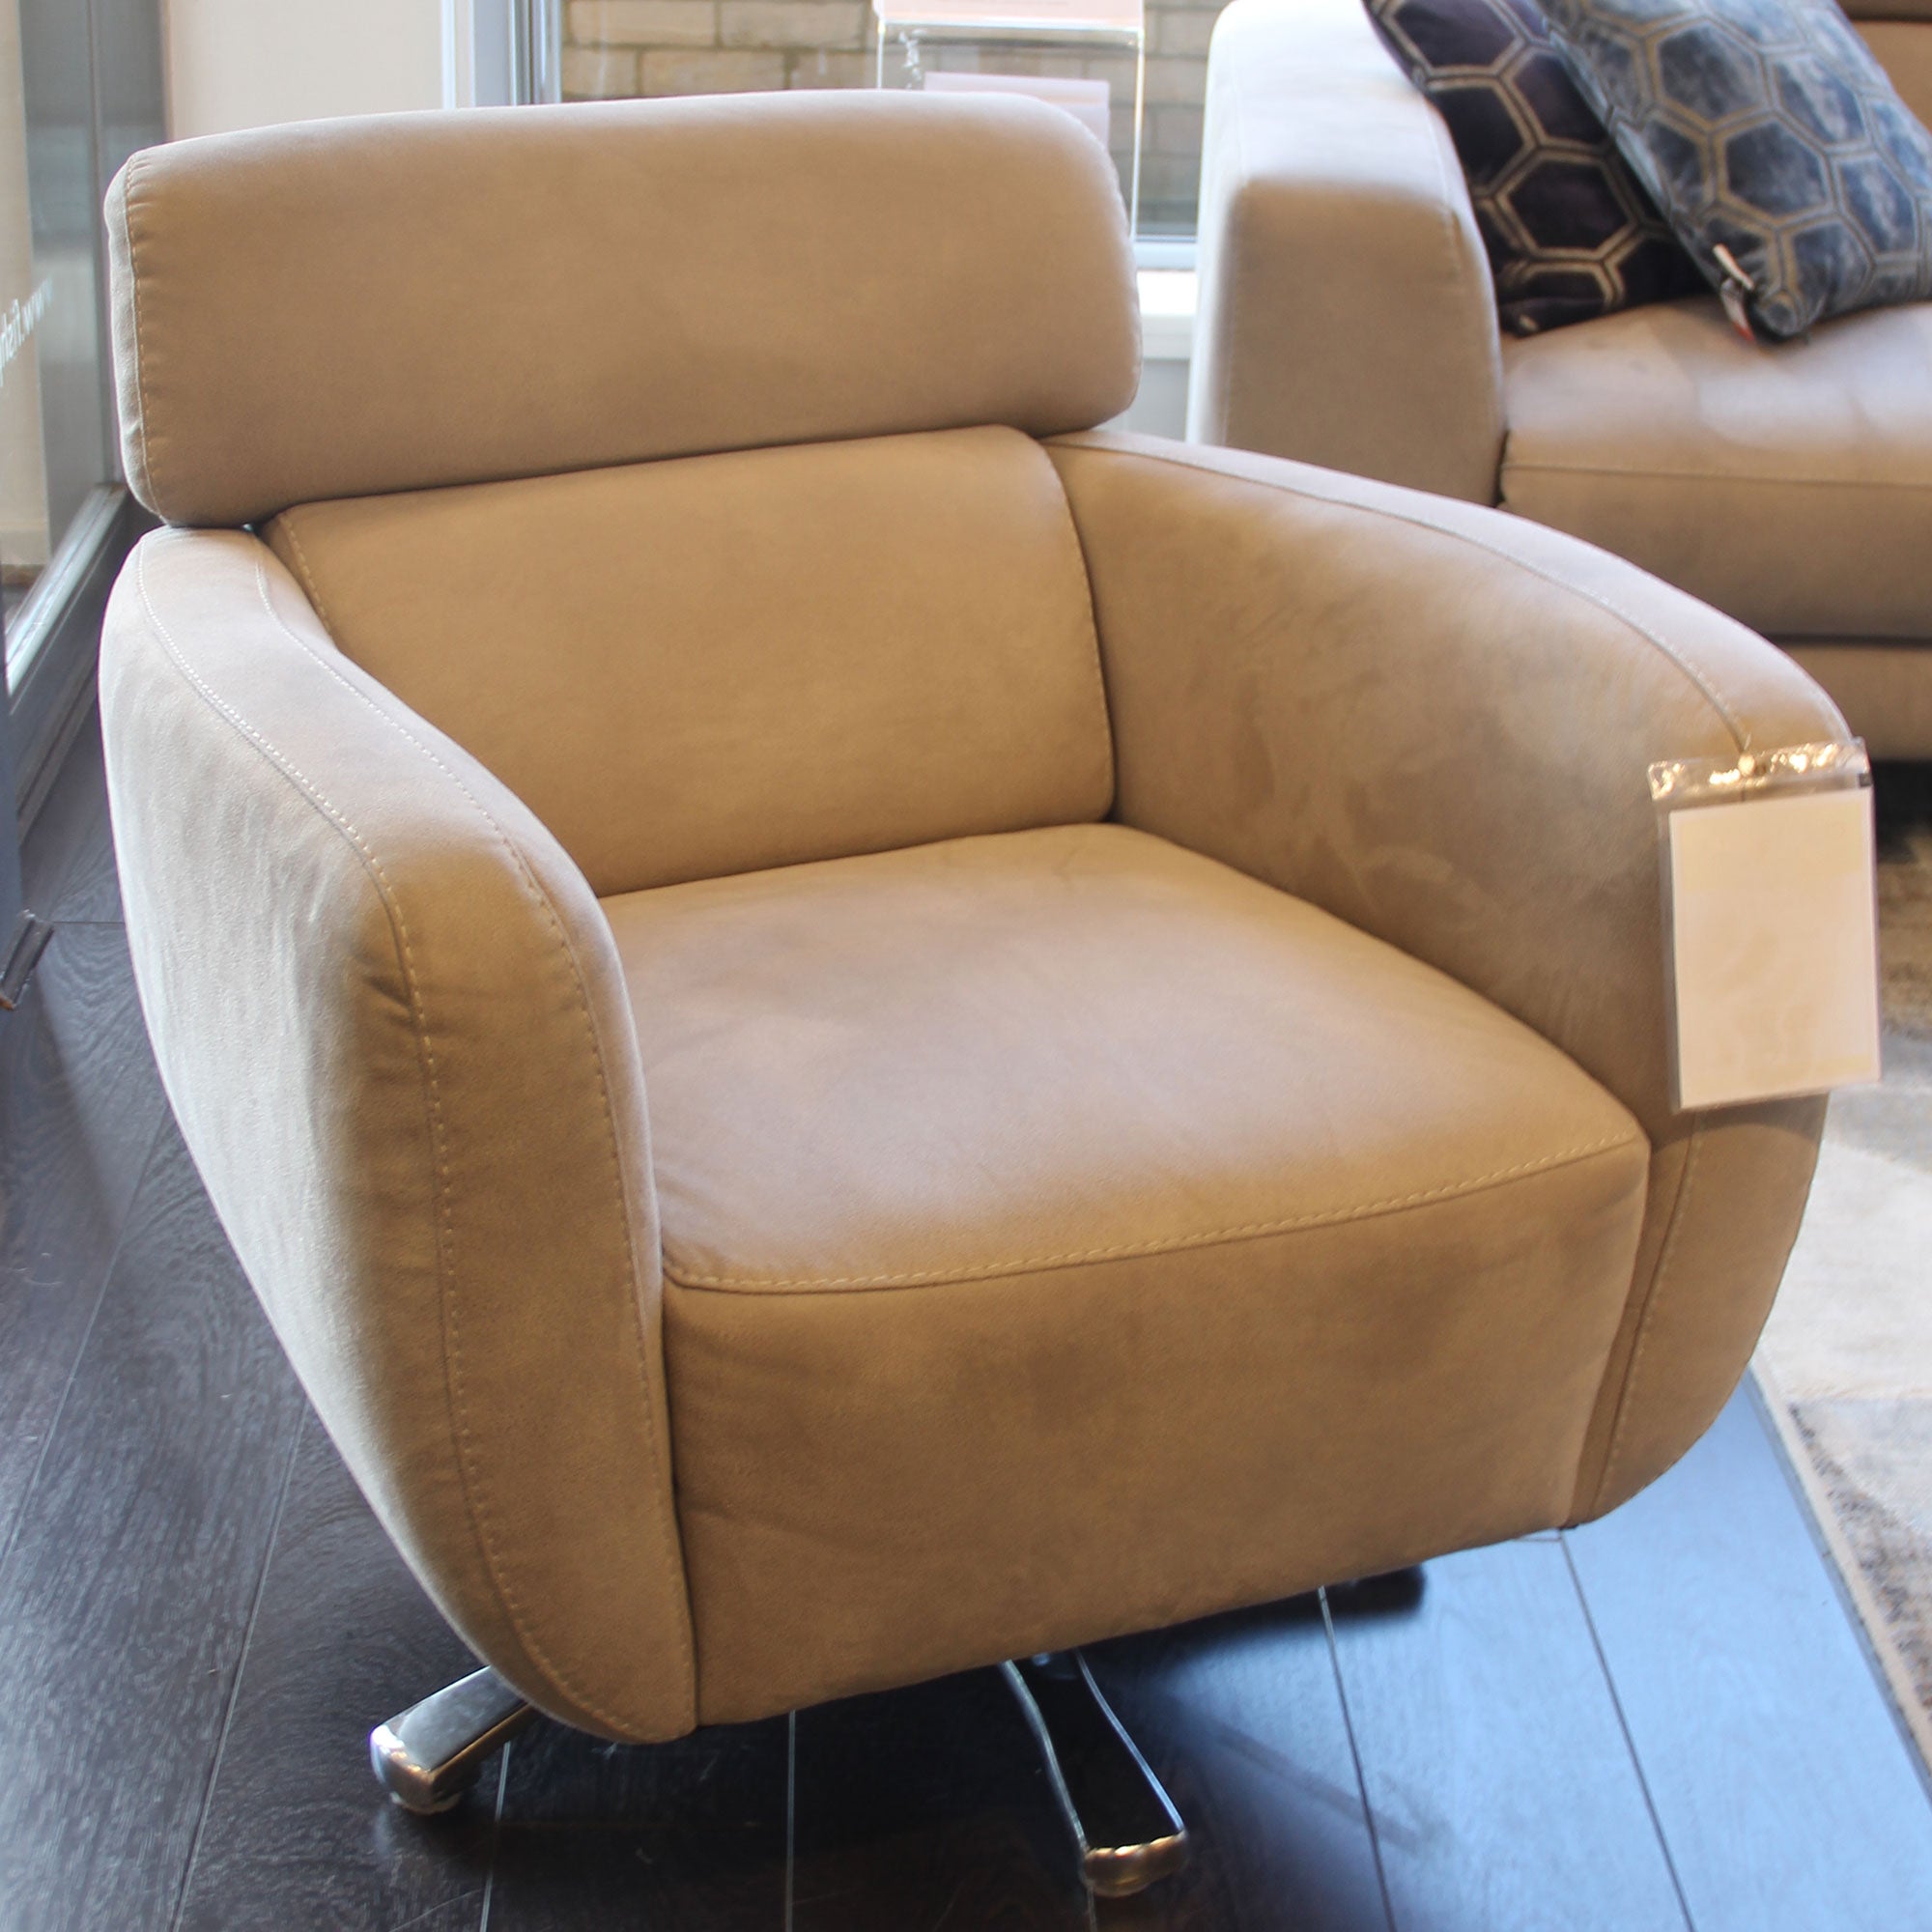 Floor Model Amalfi Swivel Chair with Chrome Frame In Fabric BLJ 22 Dove Grey